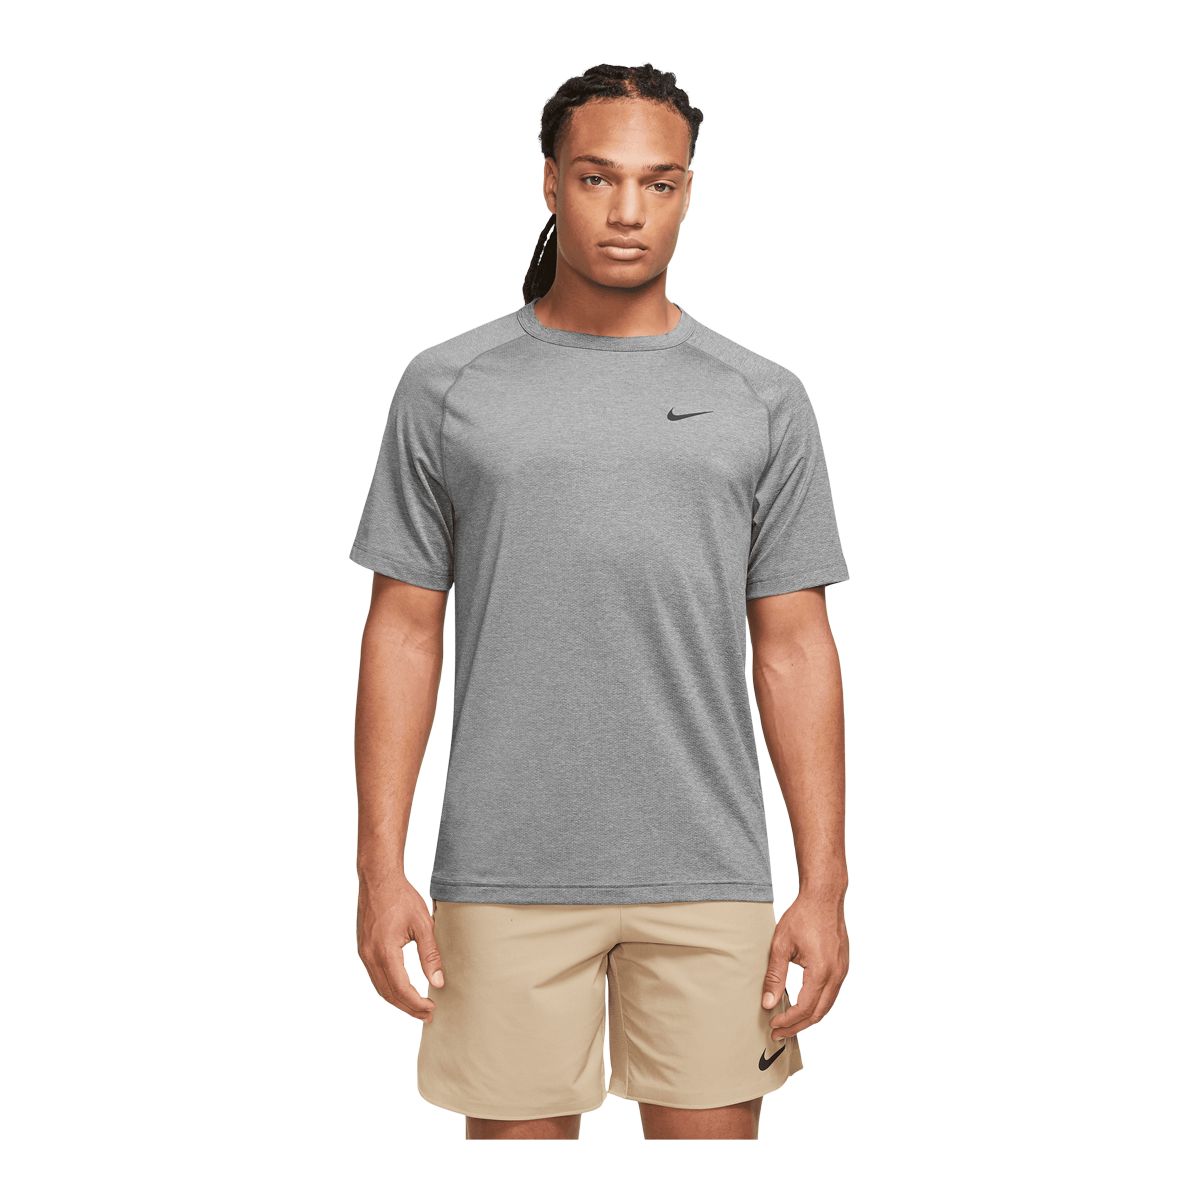 Image of Nike Men's Dri-FIT Ready T Shirt